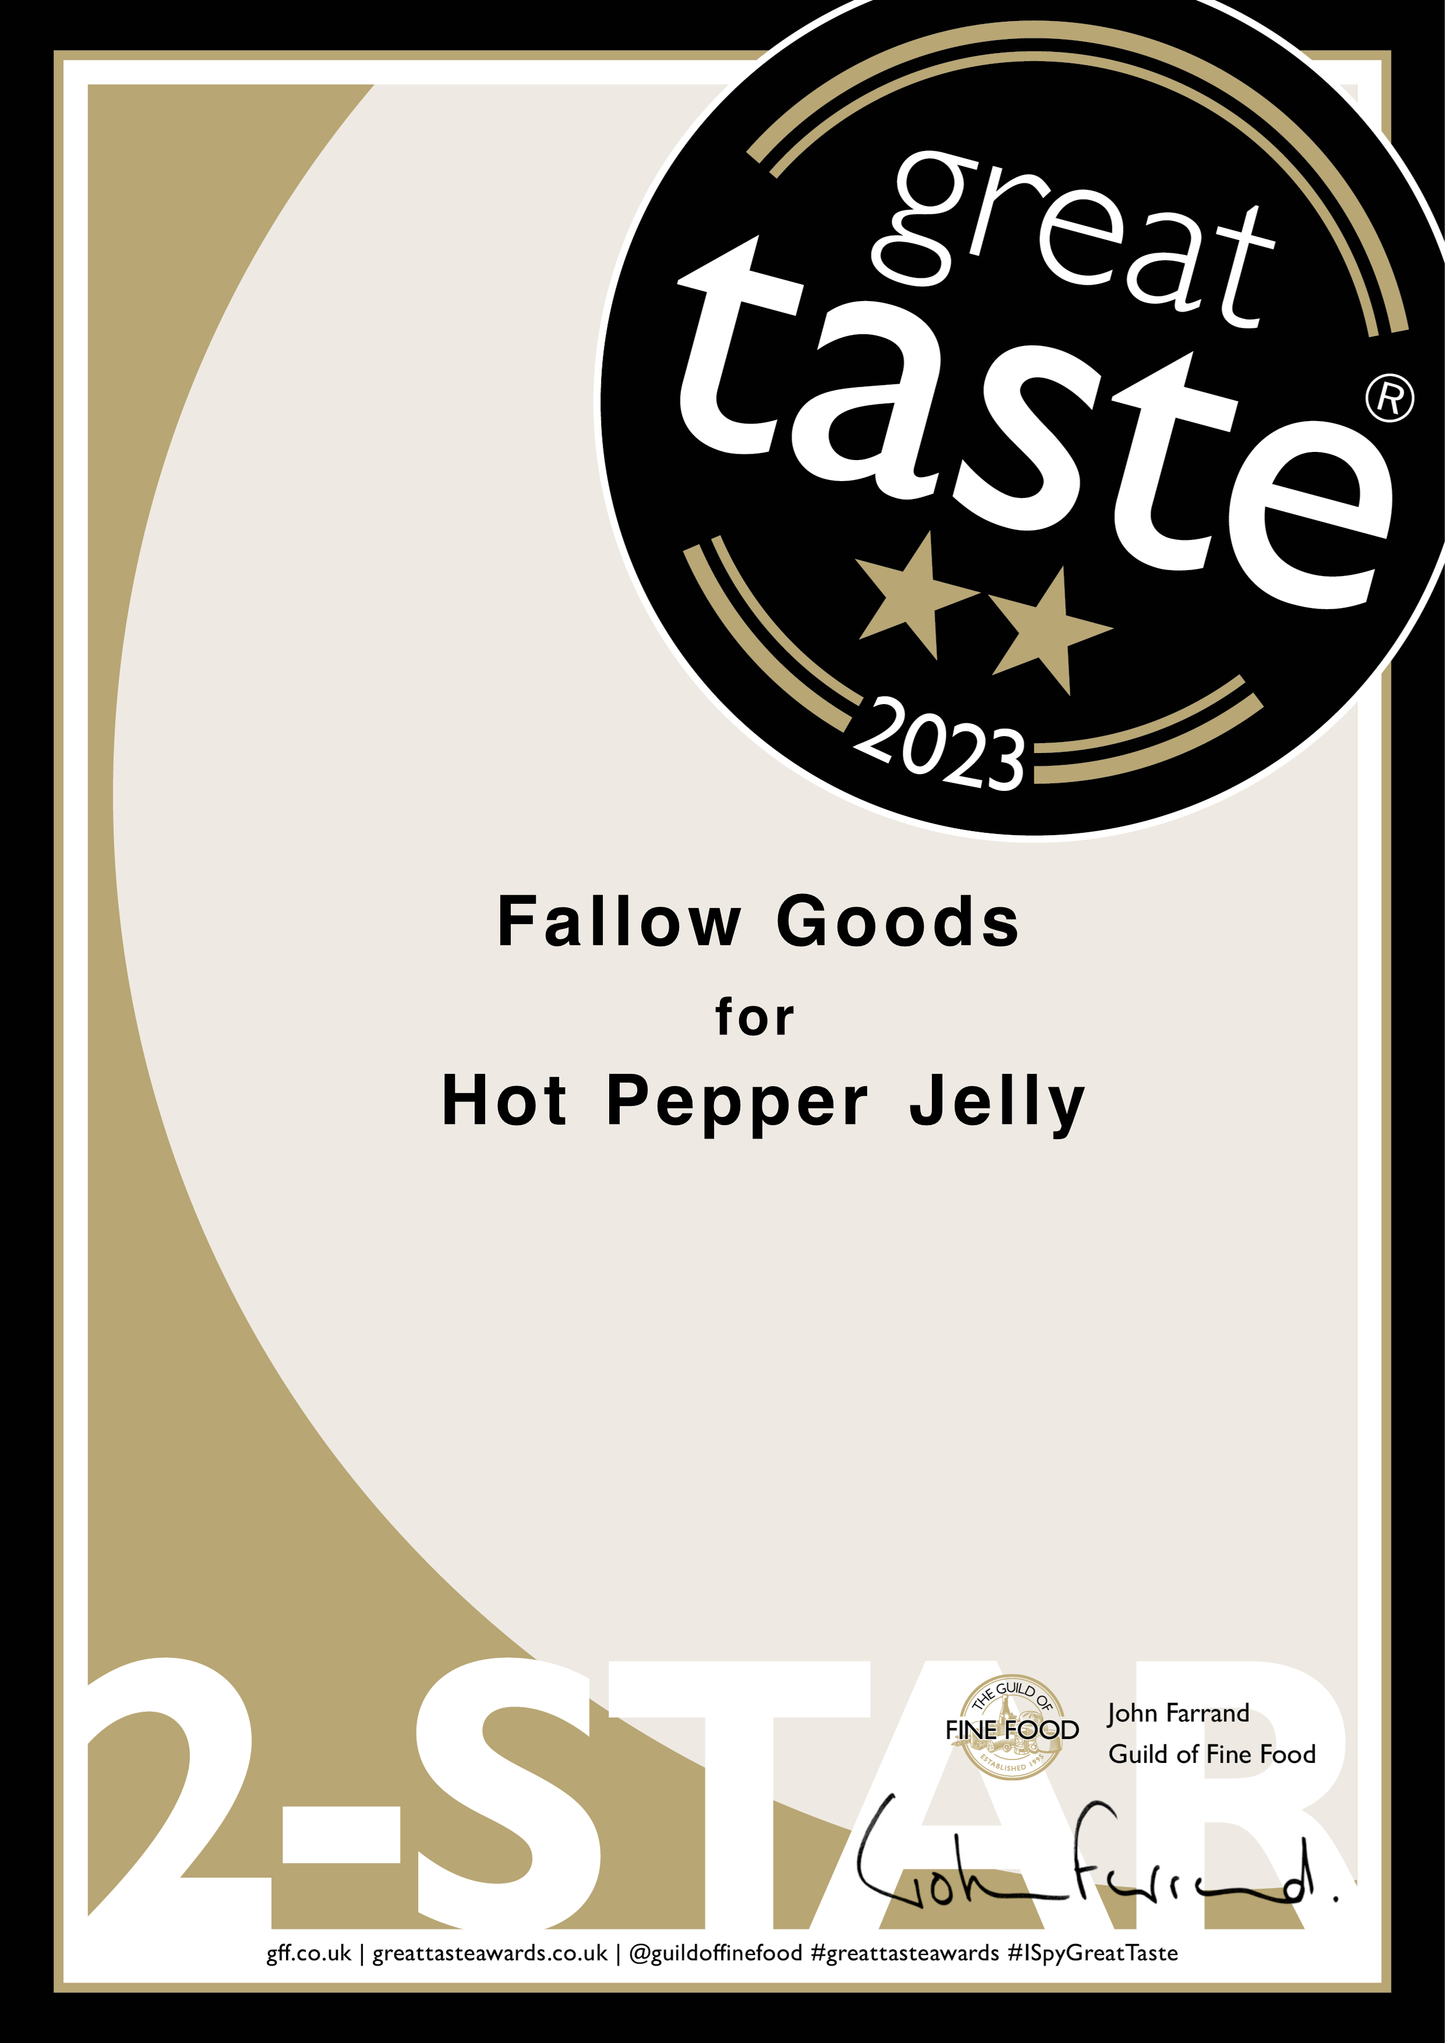 🌶 Hot Pepper Jelly 🌶